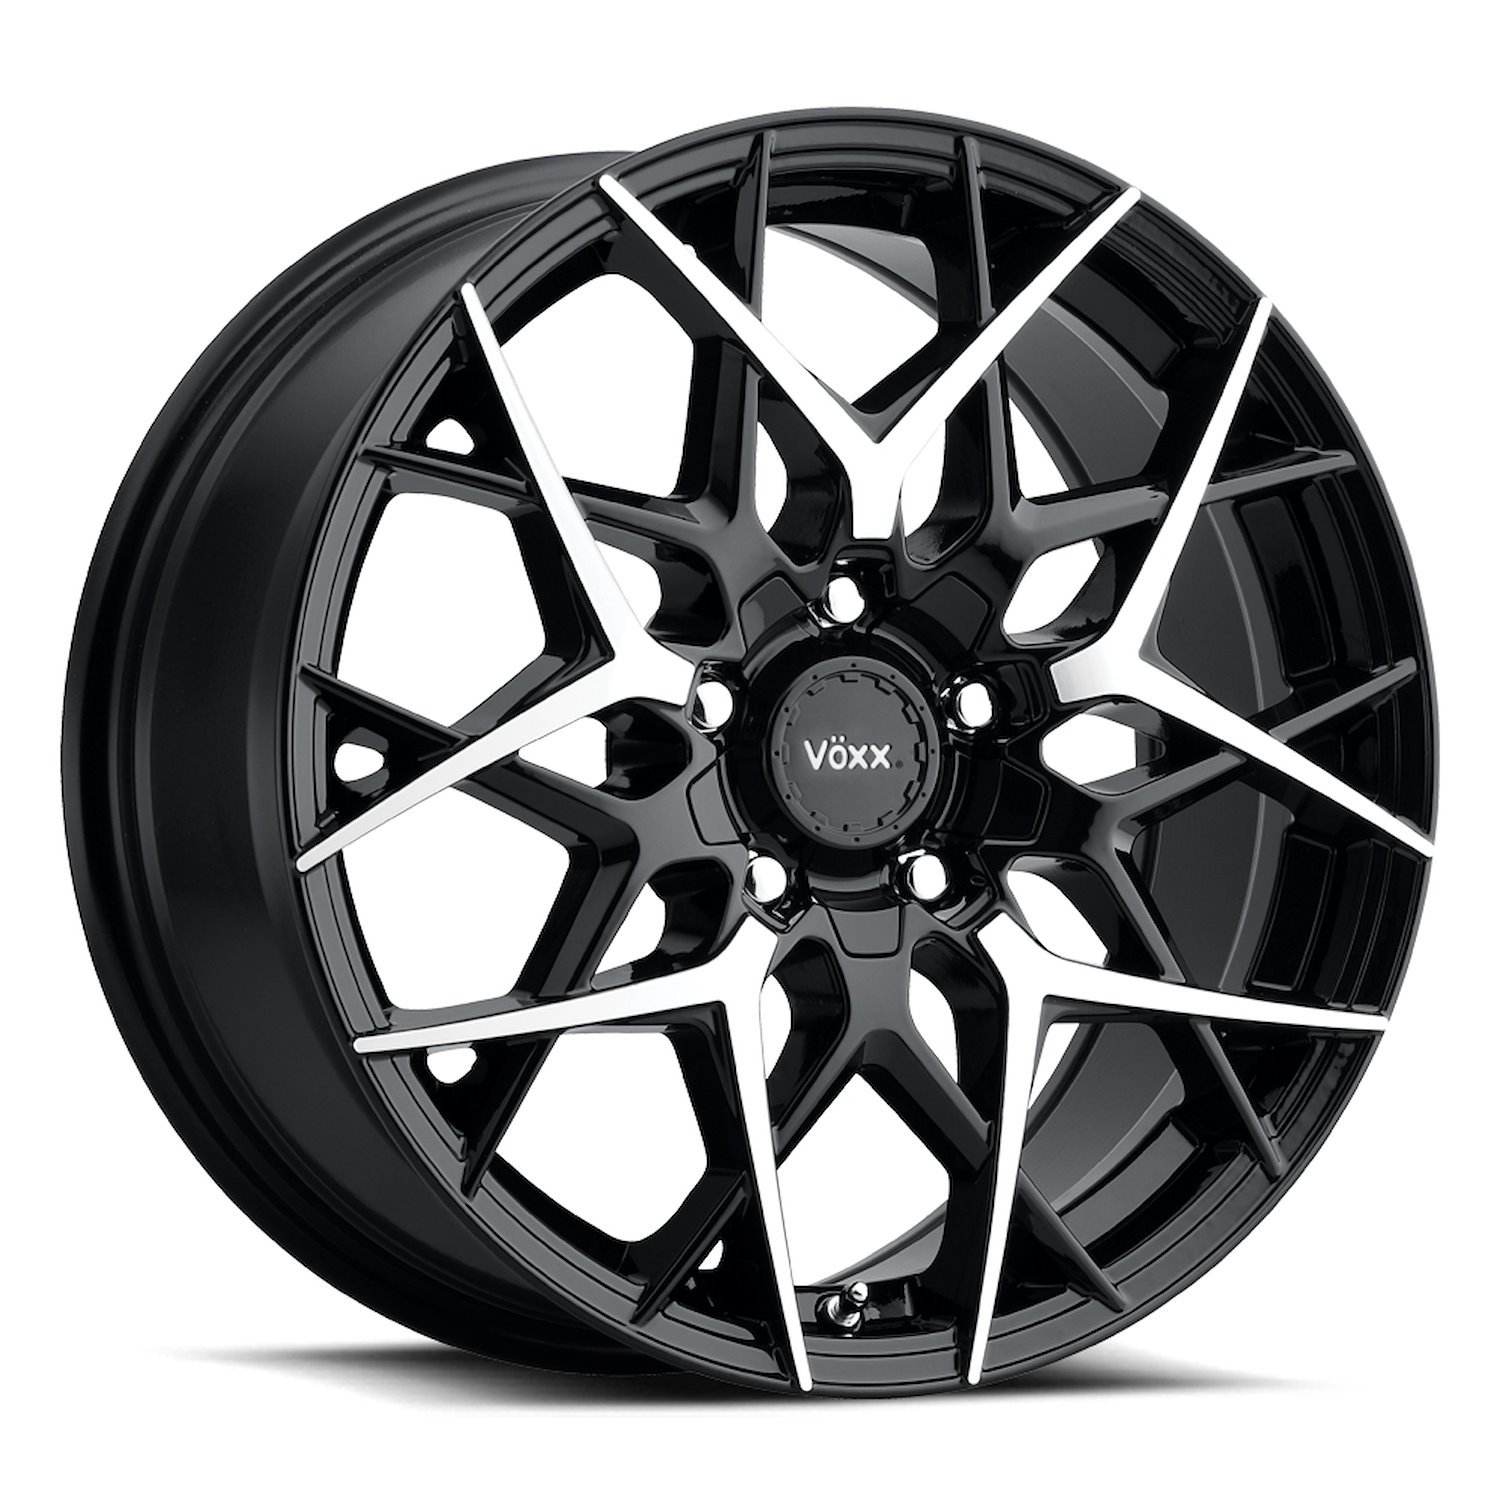 PAS 775-5002-40 GBMF Paso Wheel [Size: 17" x 7.50"] Finish: Gloss Black w/Machined Face